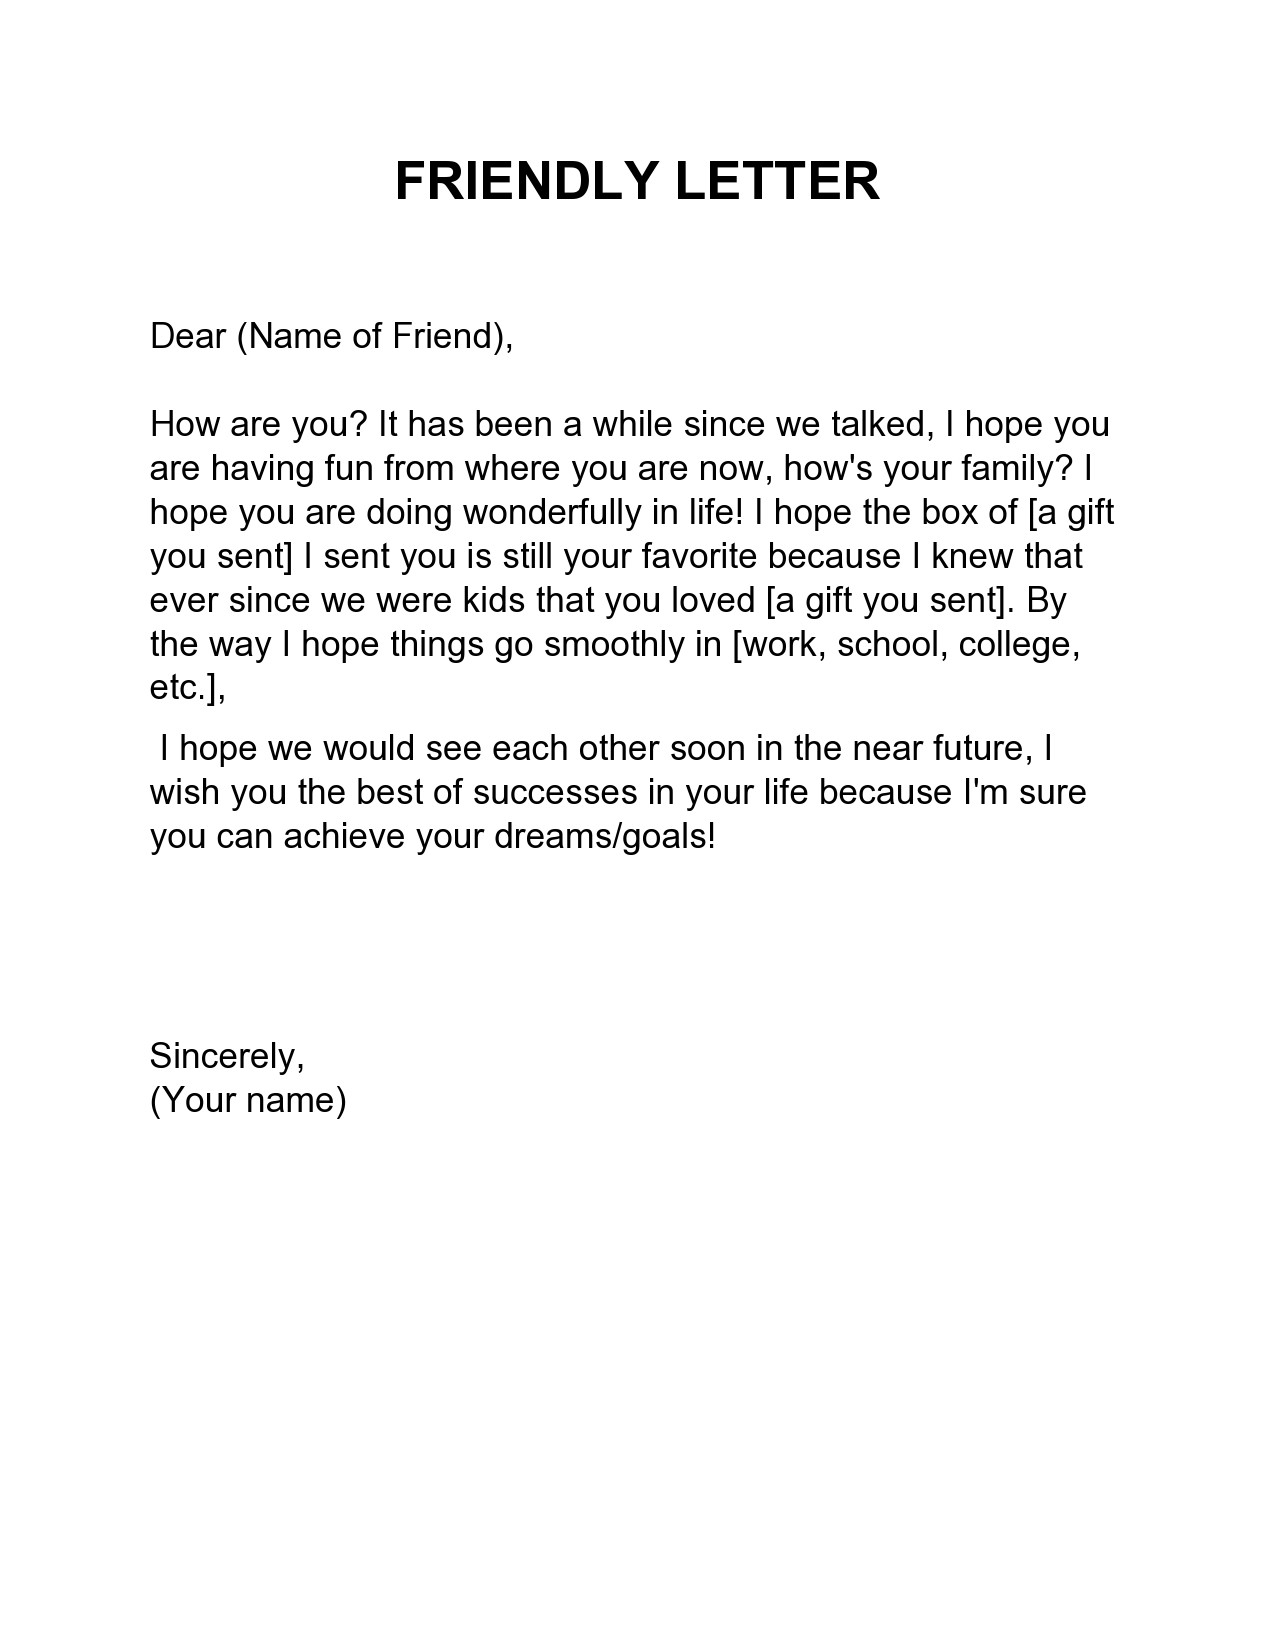 Free friendly letter format 16